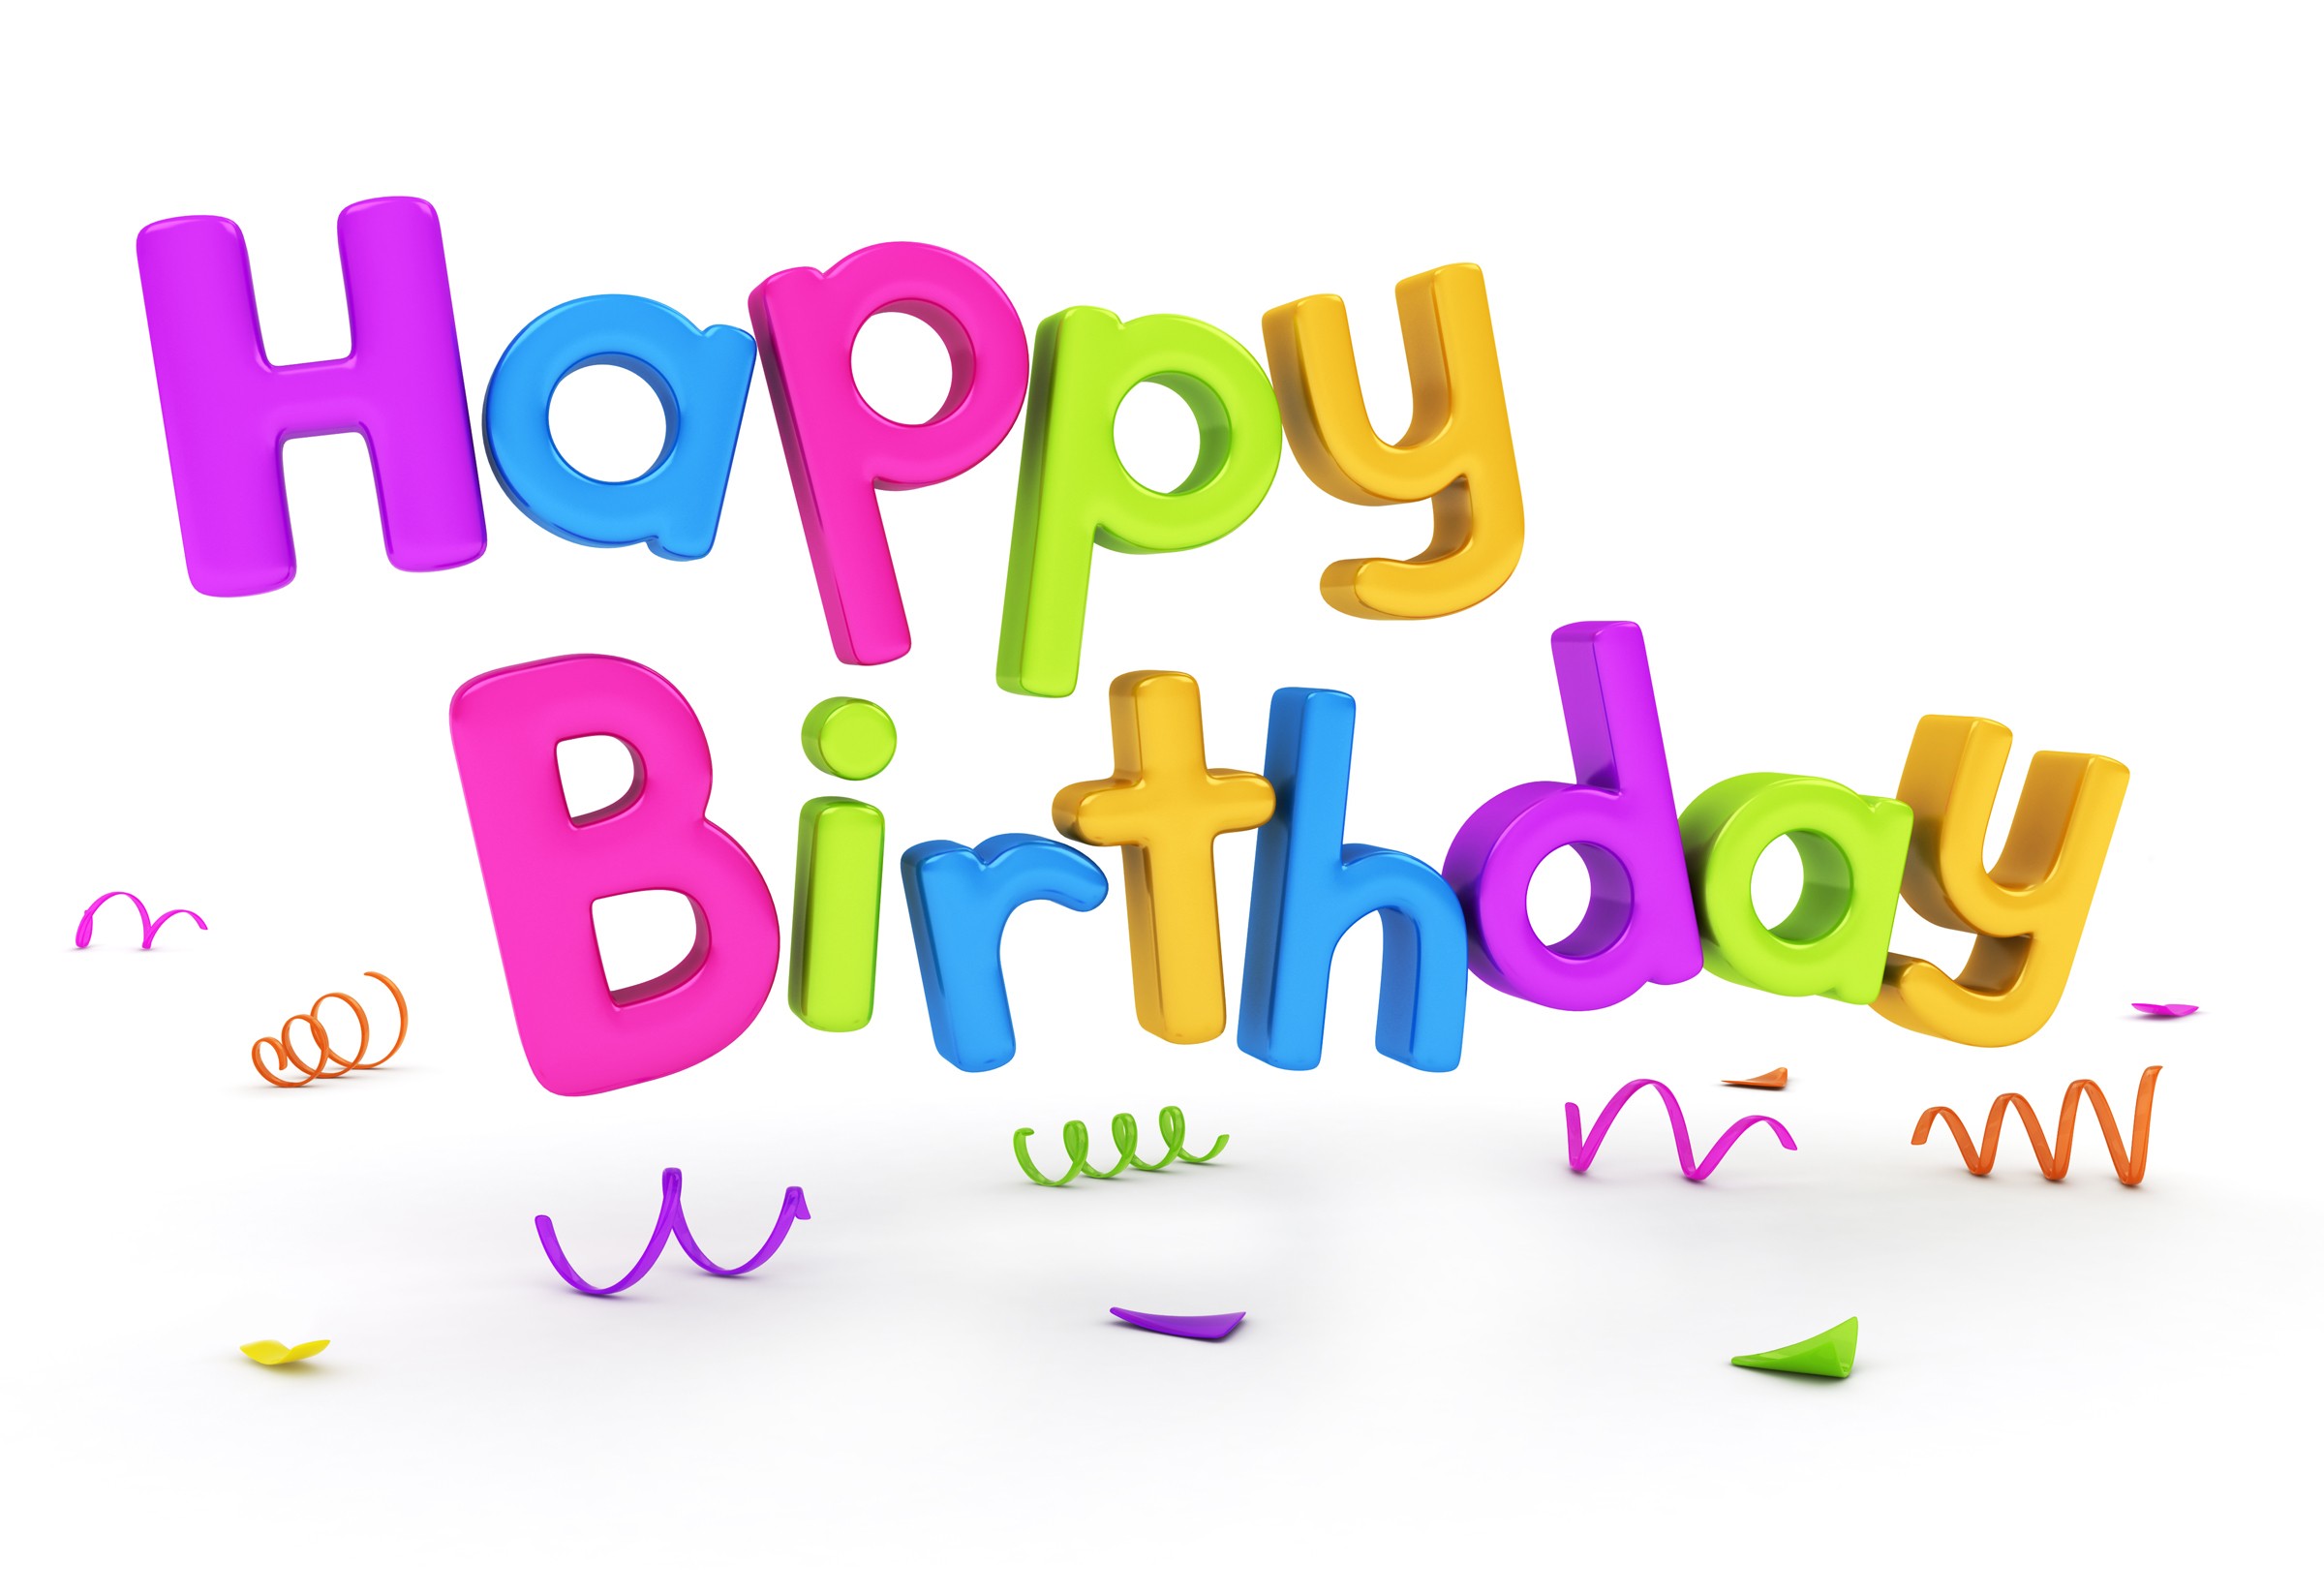 Happy Birthday Son Great Guy You Are 5”x7” Hallmark Greeting Card Outdoors  | eBay